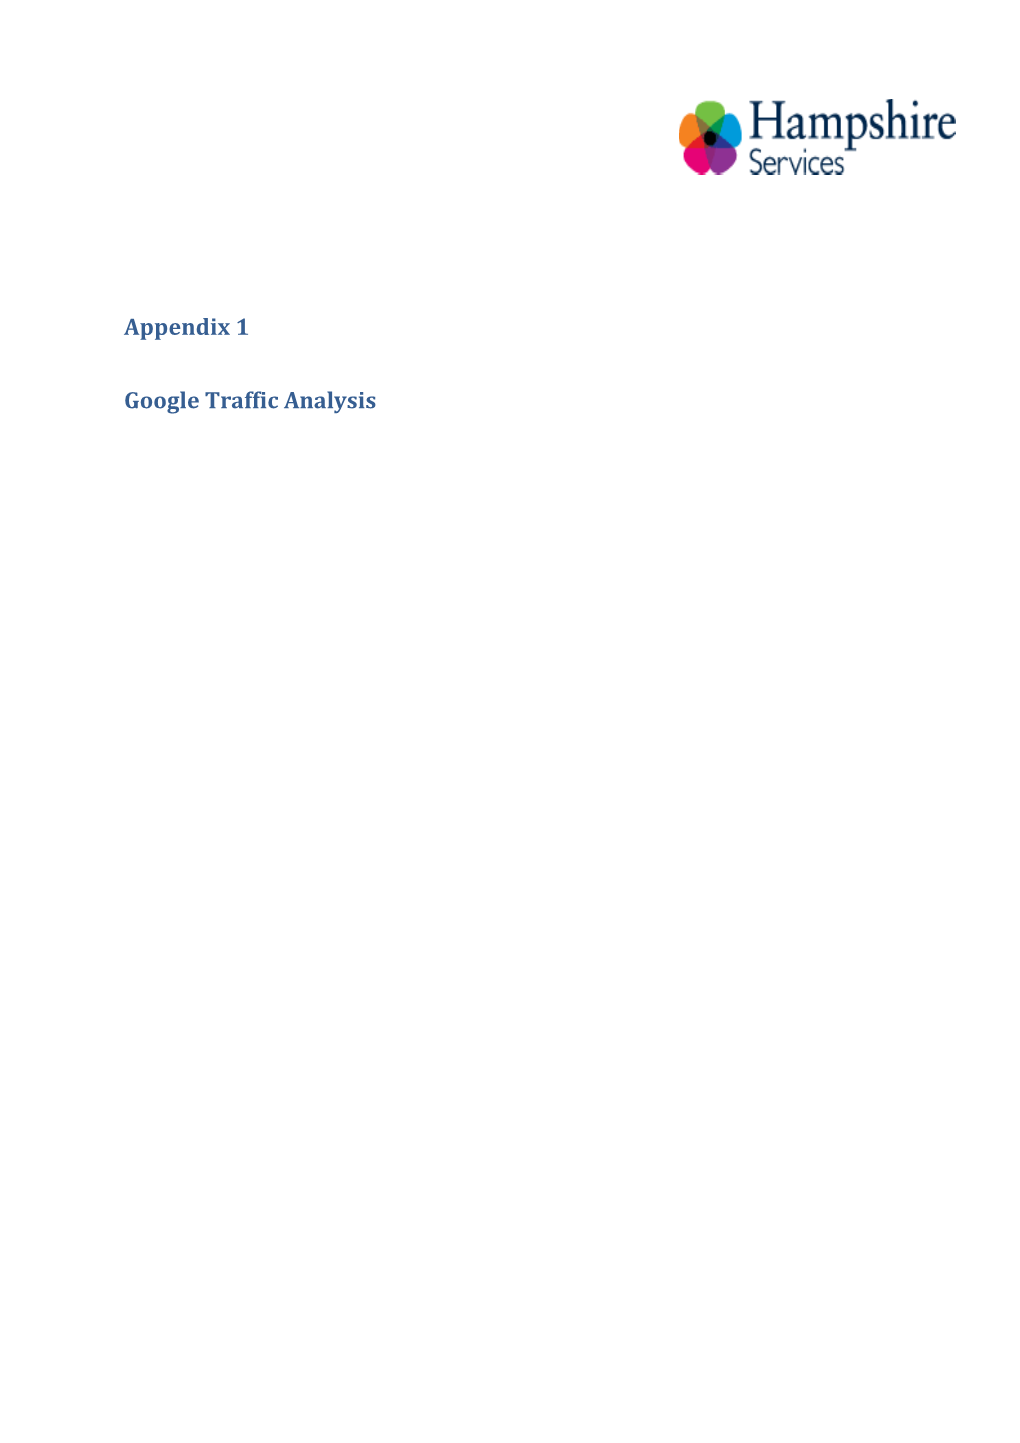 Appendix 1 Google Traffic Analysis